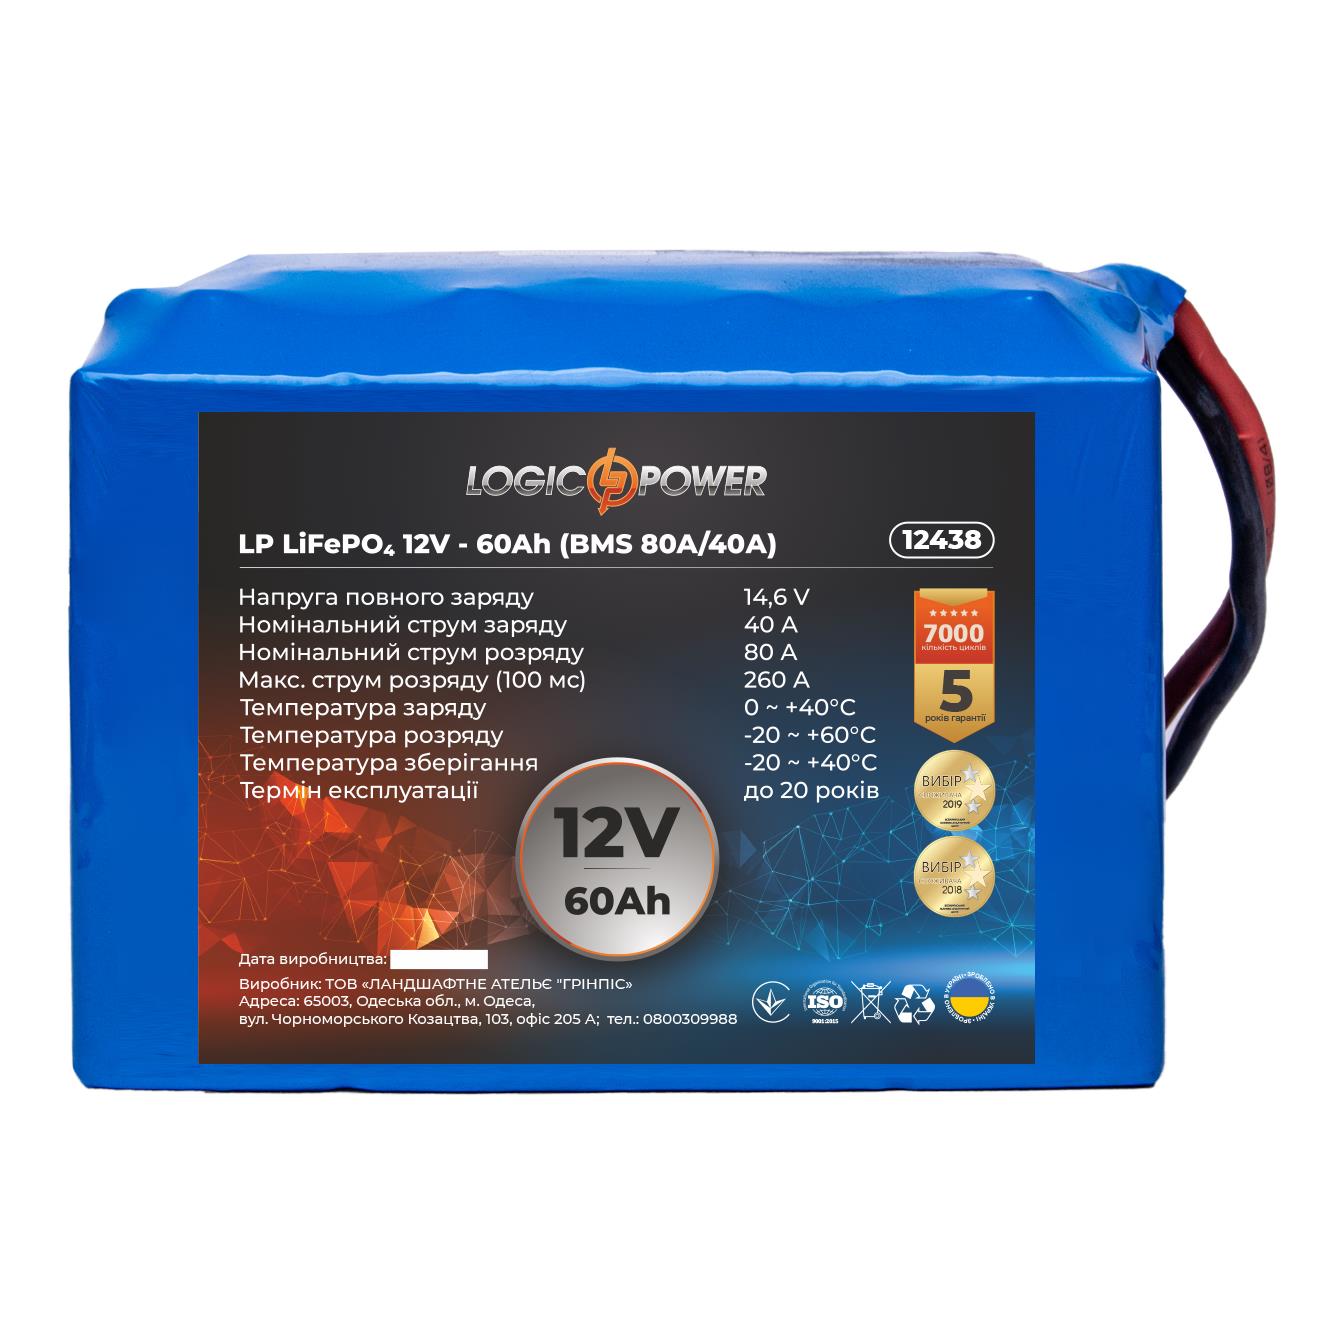 LogicPower LP LiFePO4 12V - 60 Ah (BMS 80A/40А) (12438)